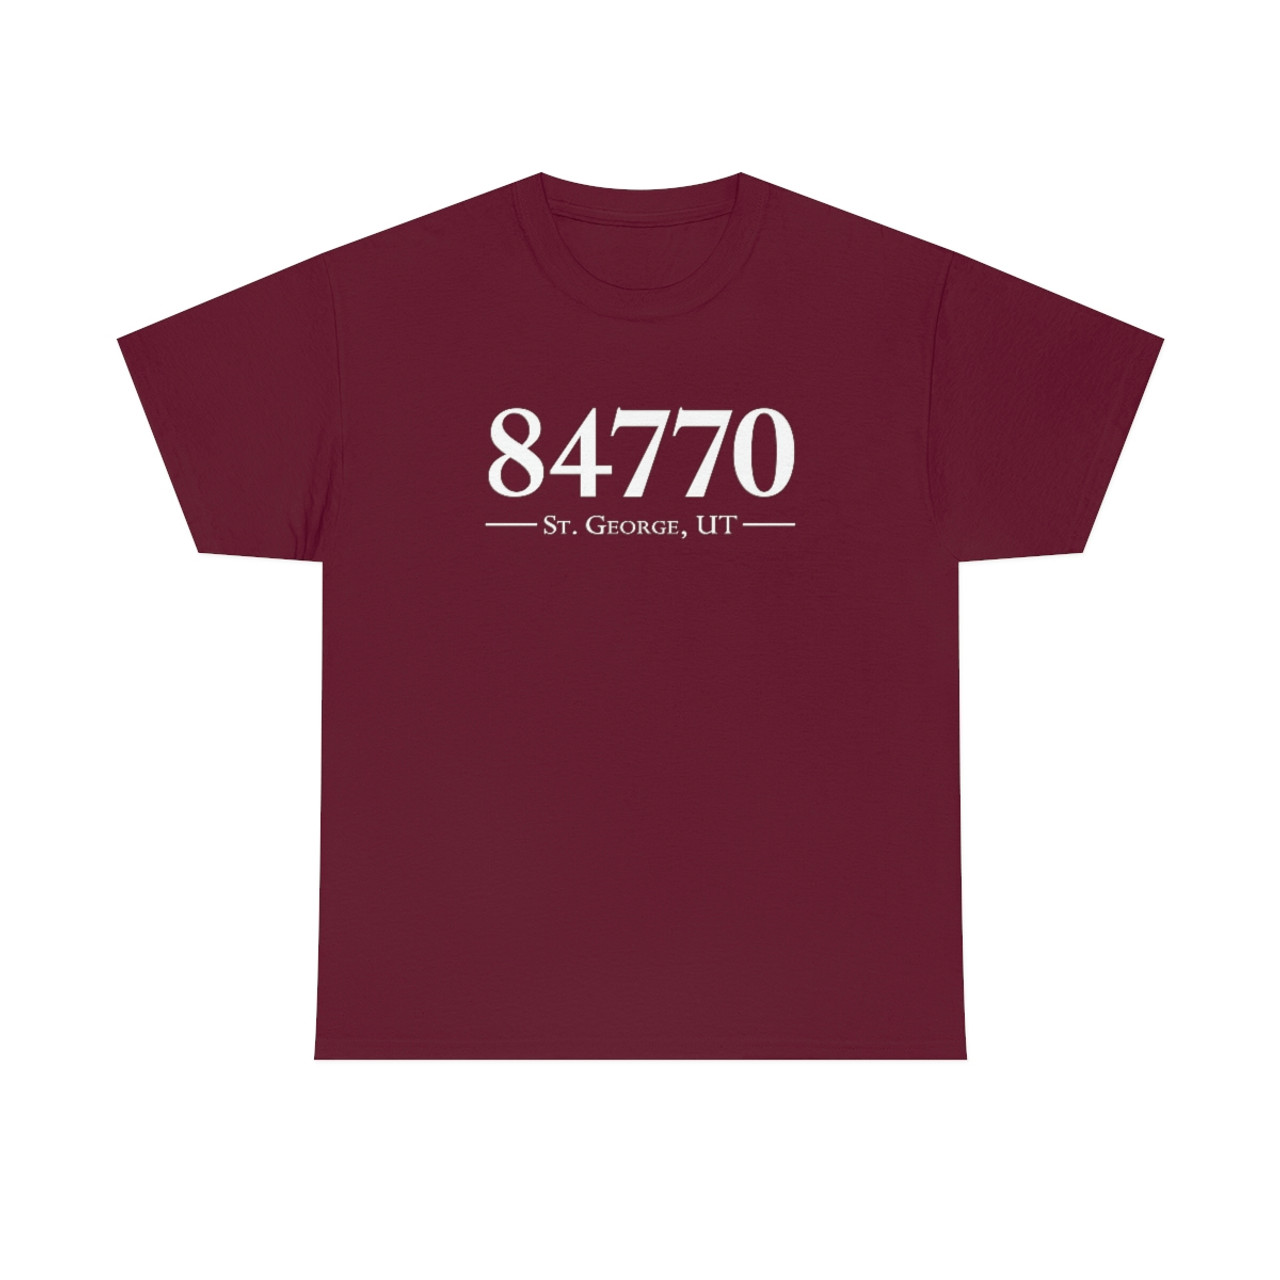 Zip Code T-Shirt St. UTAH - UT 84770 George, primi